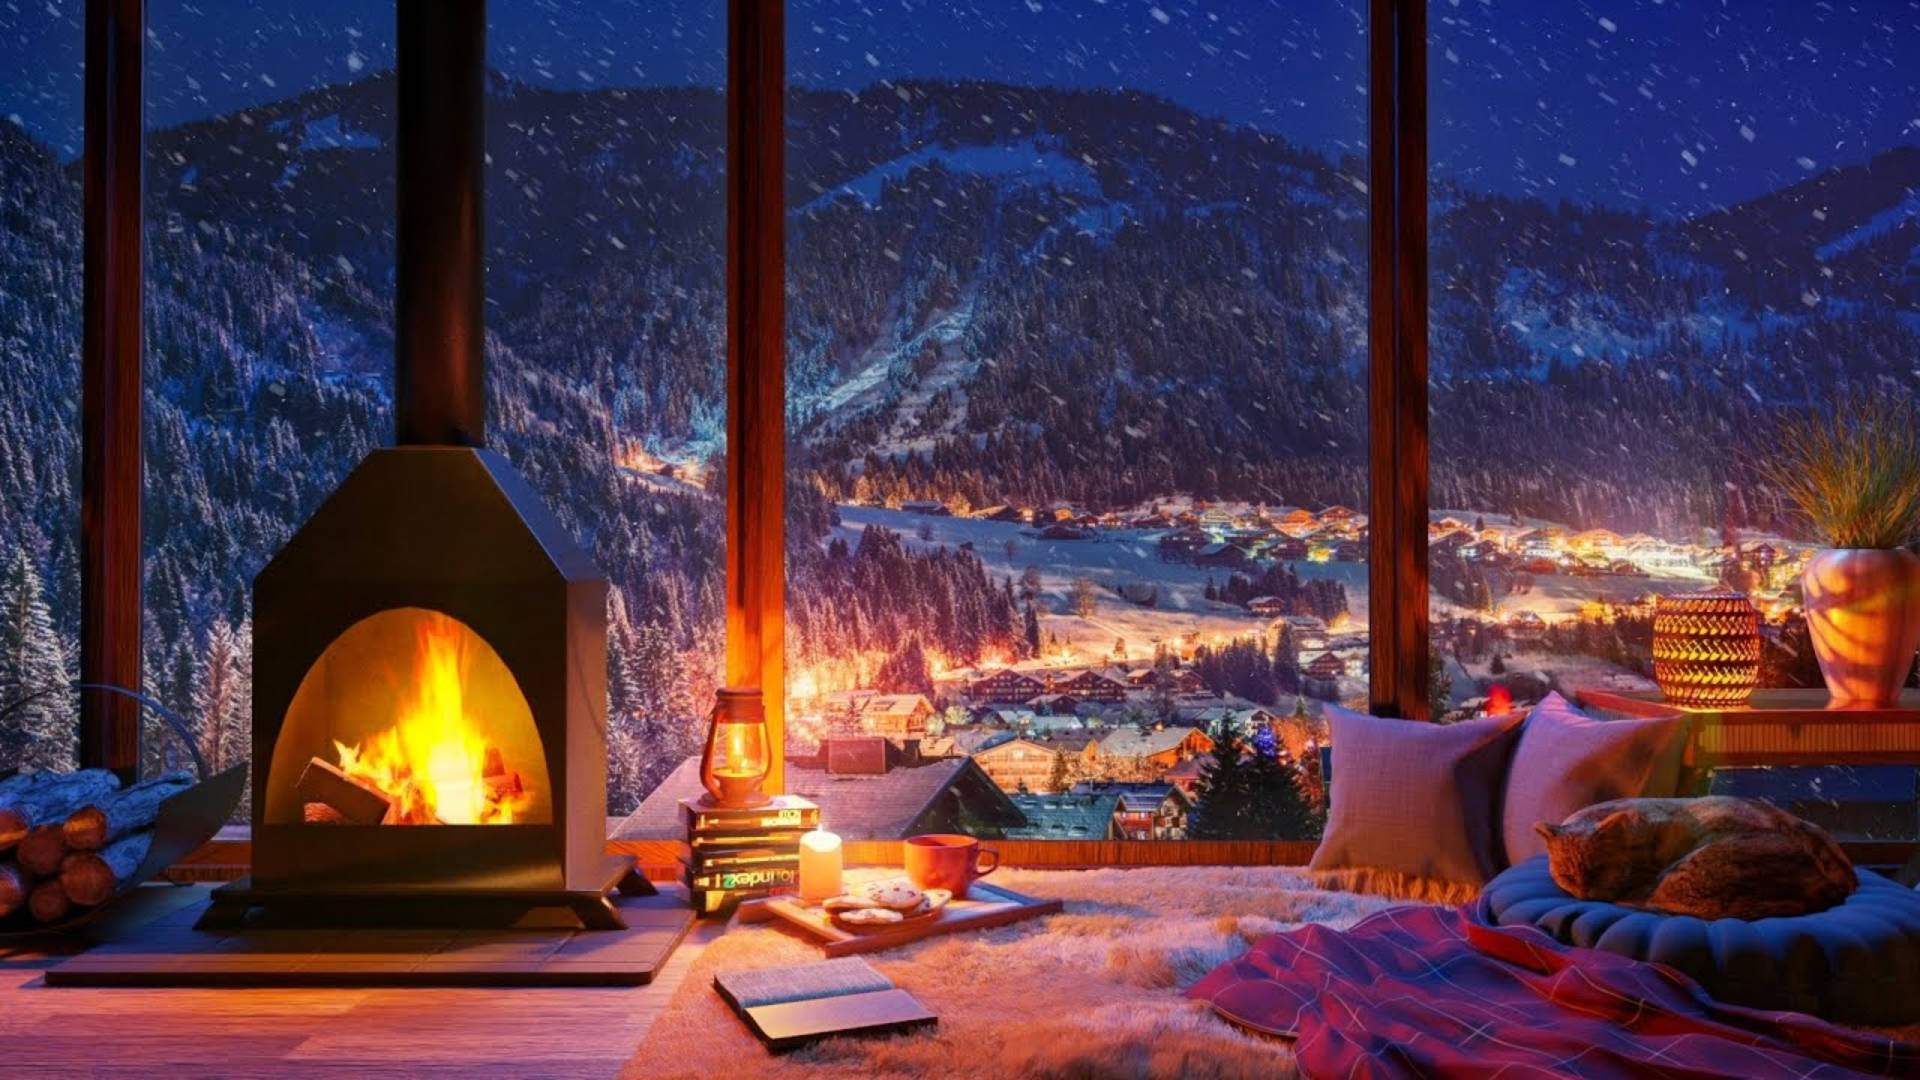 Cozy Winter Evening Near The Fireplace Wallpaper